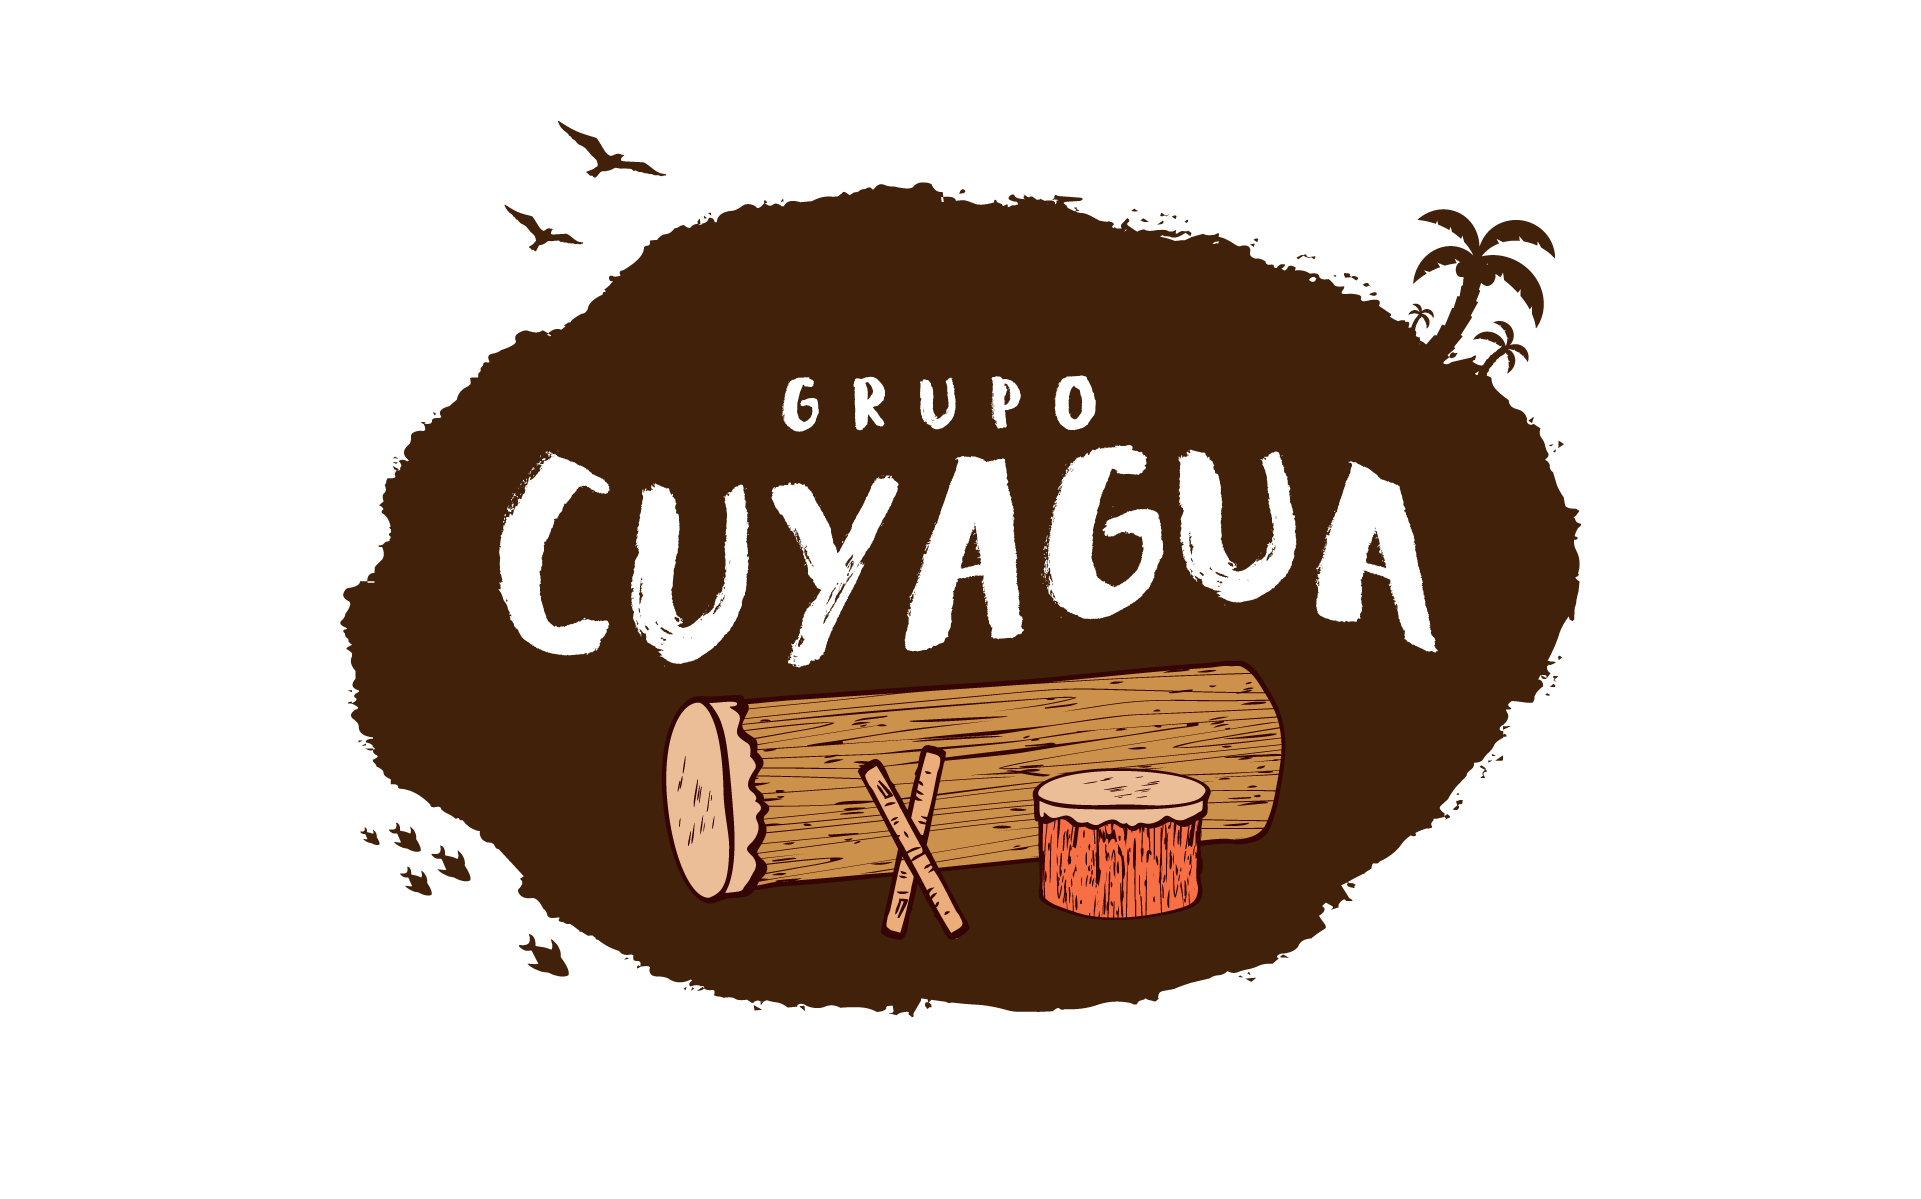 Cuyagua logo transparente.png